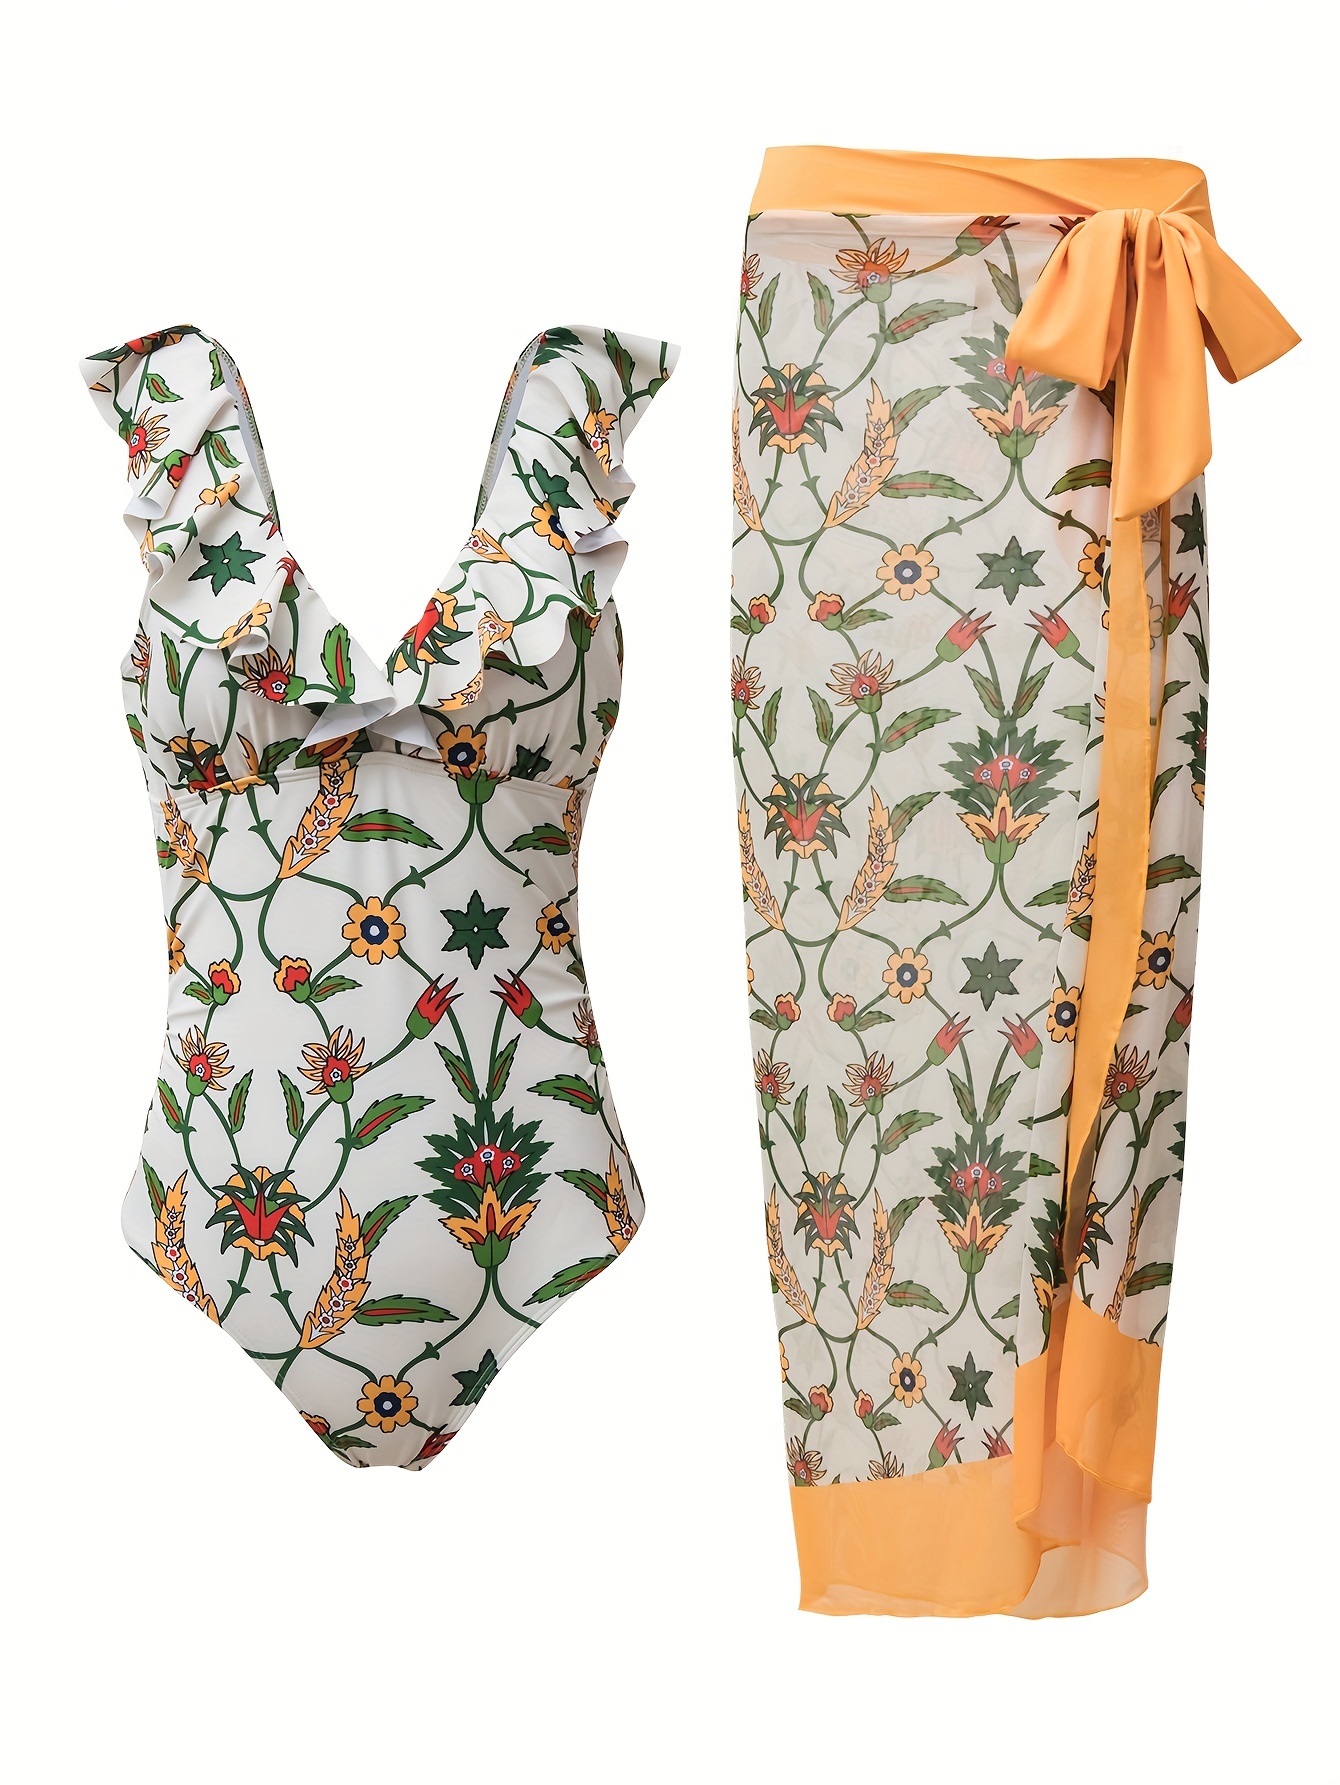 Women's Print V-neck One Piece Bikini With Long Sarong Cover Ups